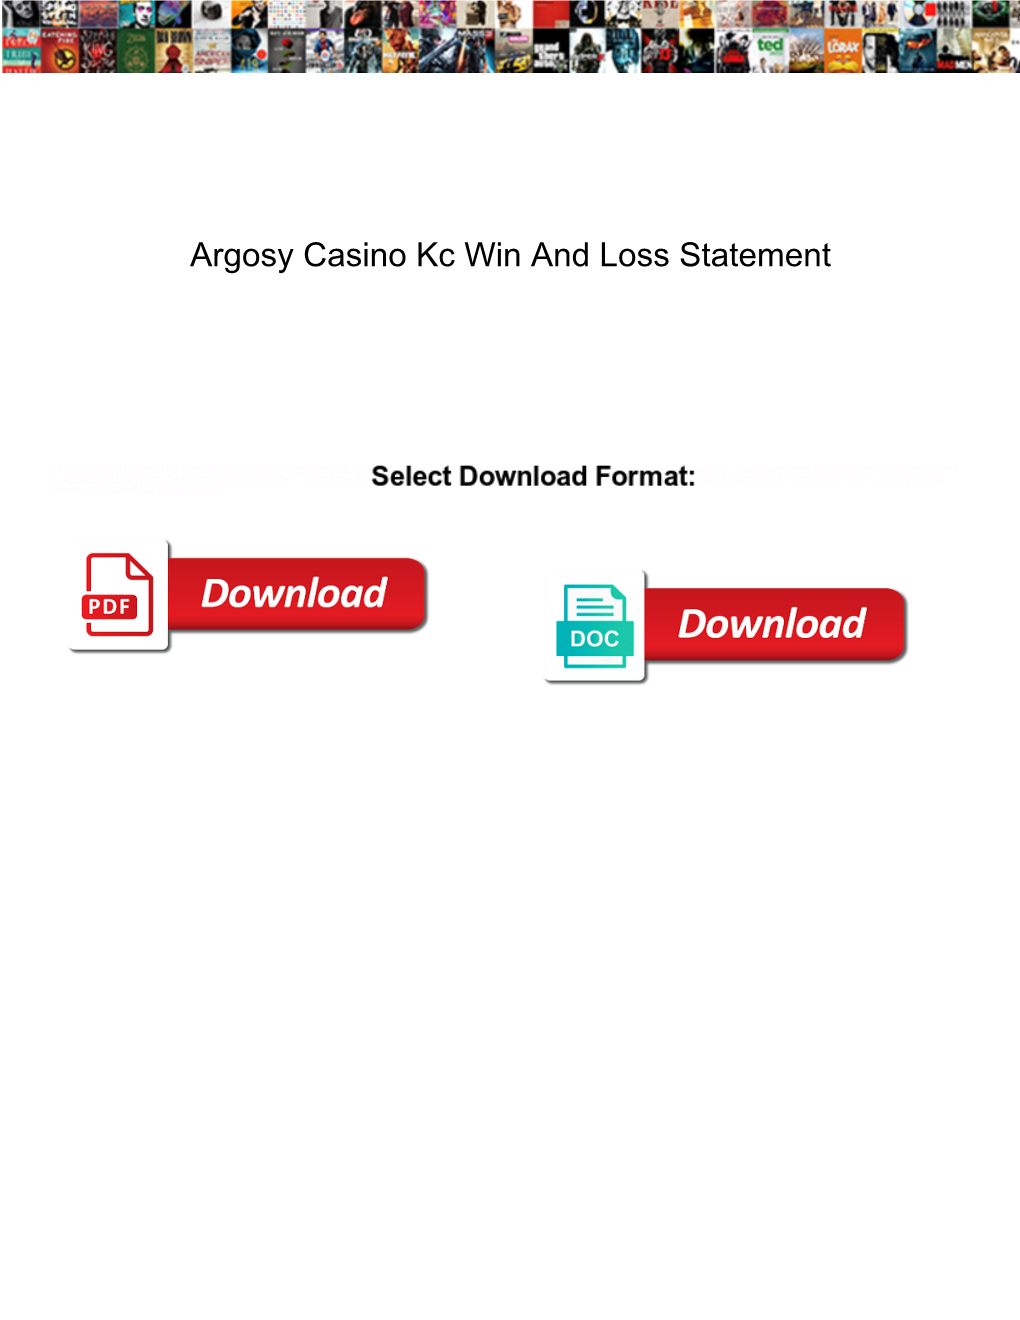 Argosy Casino Kc Win and Loss Statement